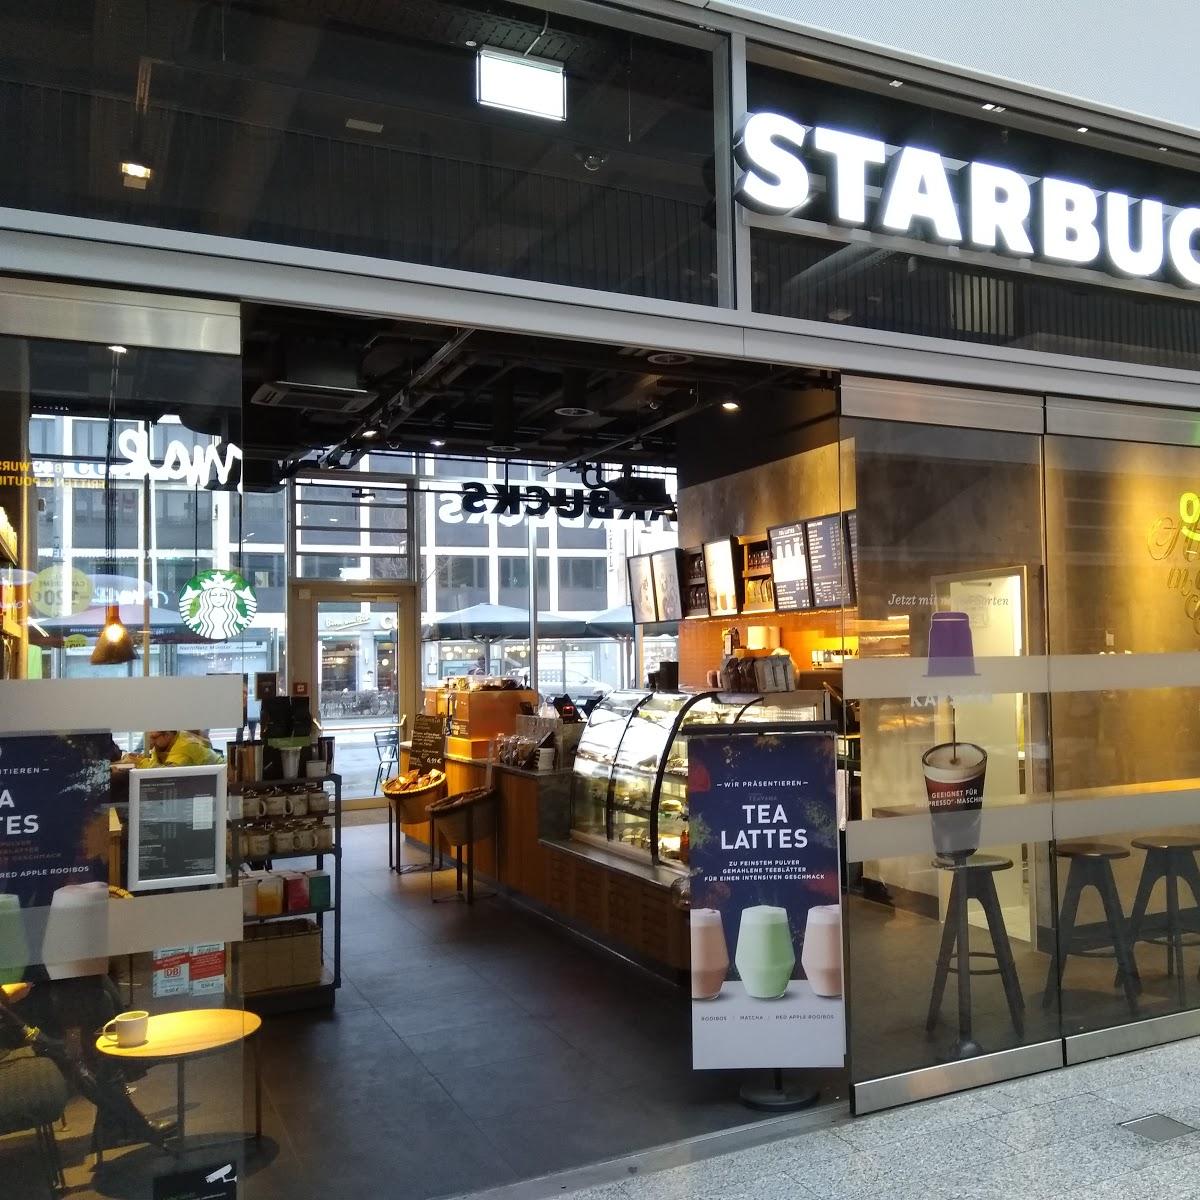 Restaurant "Starbucks" in Münster